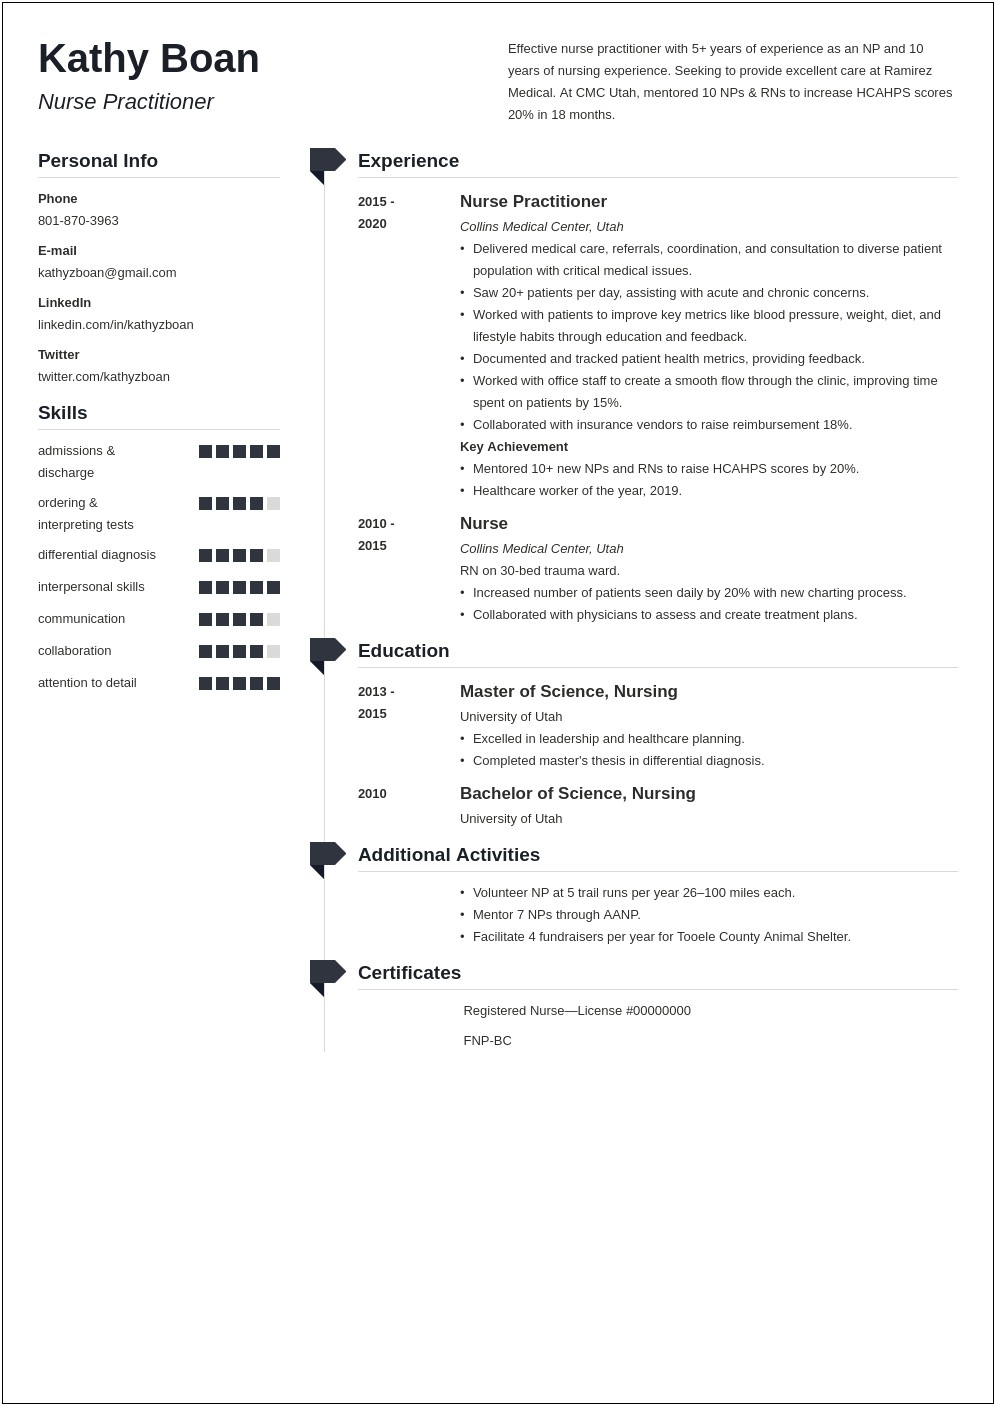 Sample Resume For Entry Level Nurse Practitioner